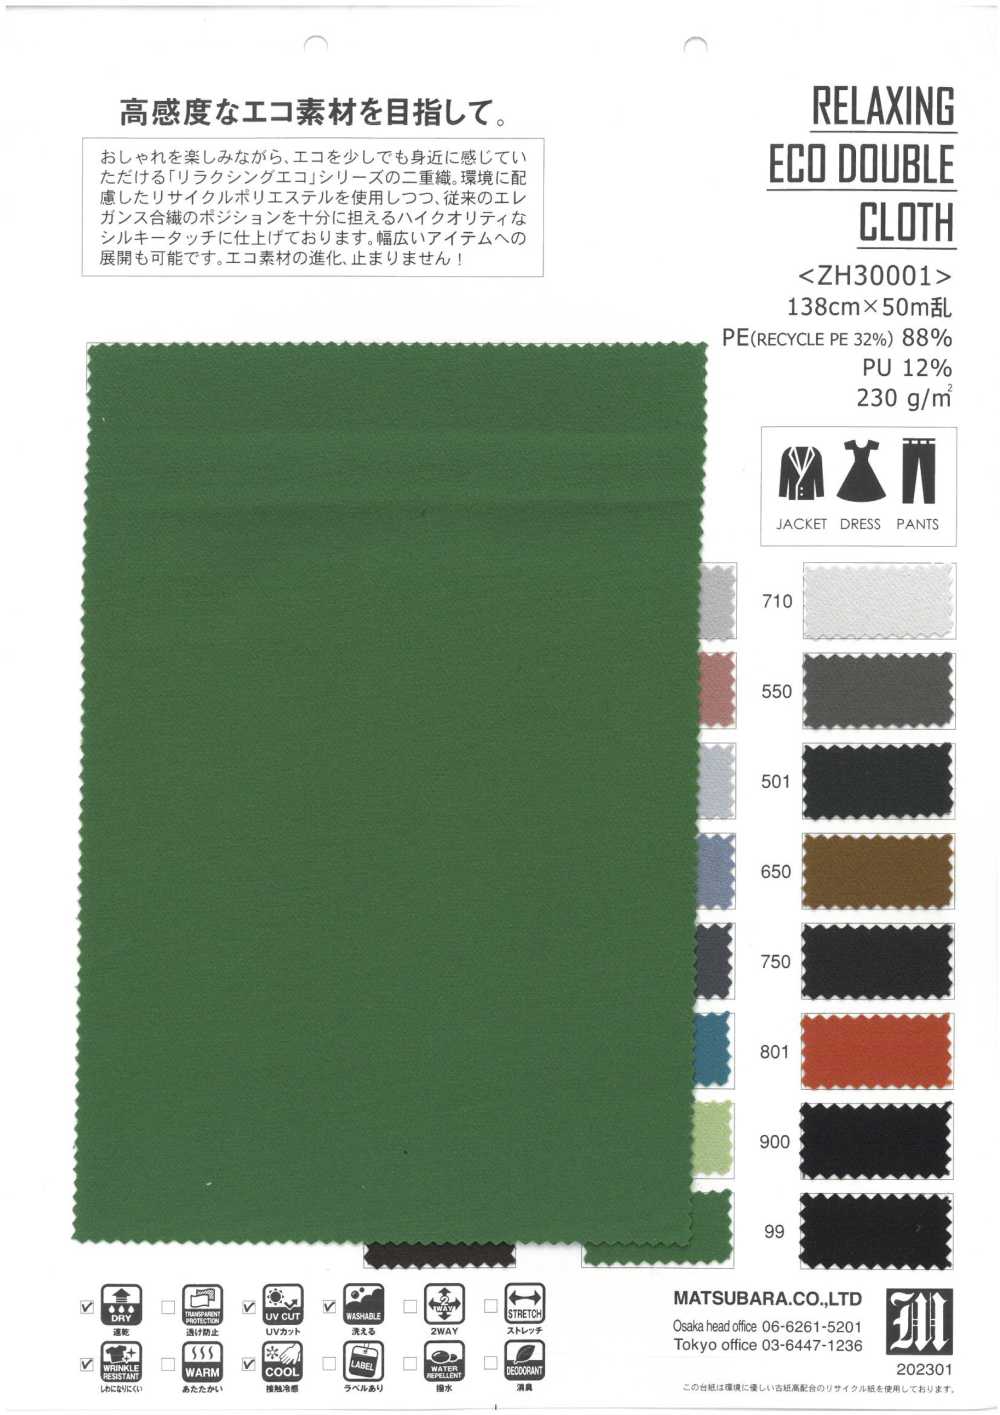 ZH30001 PANO DUPLO ECO RELAXANTE[Têxtil / Tecido] Matsubara